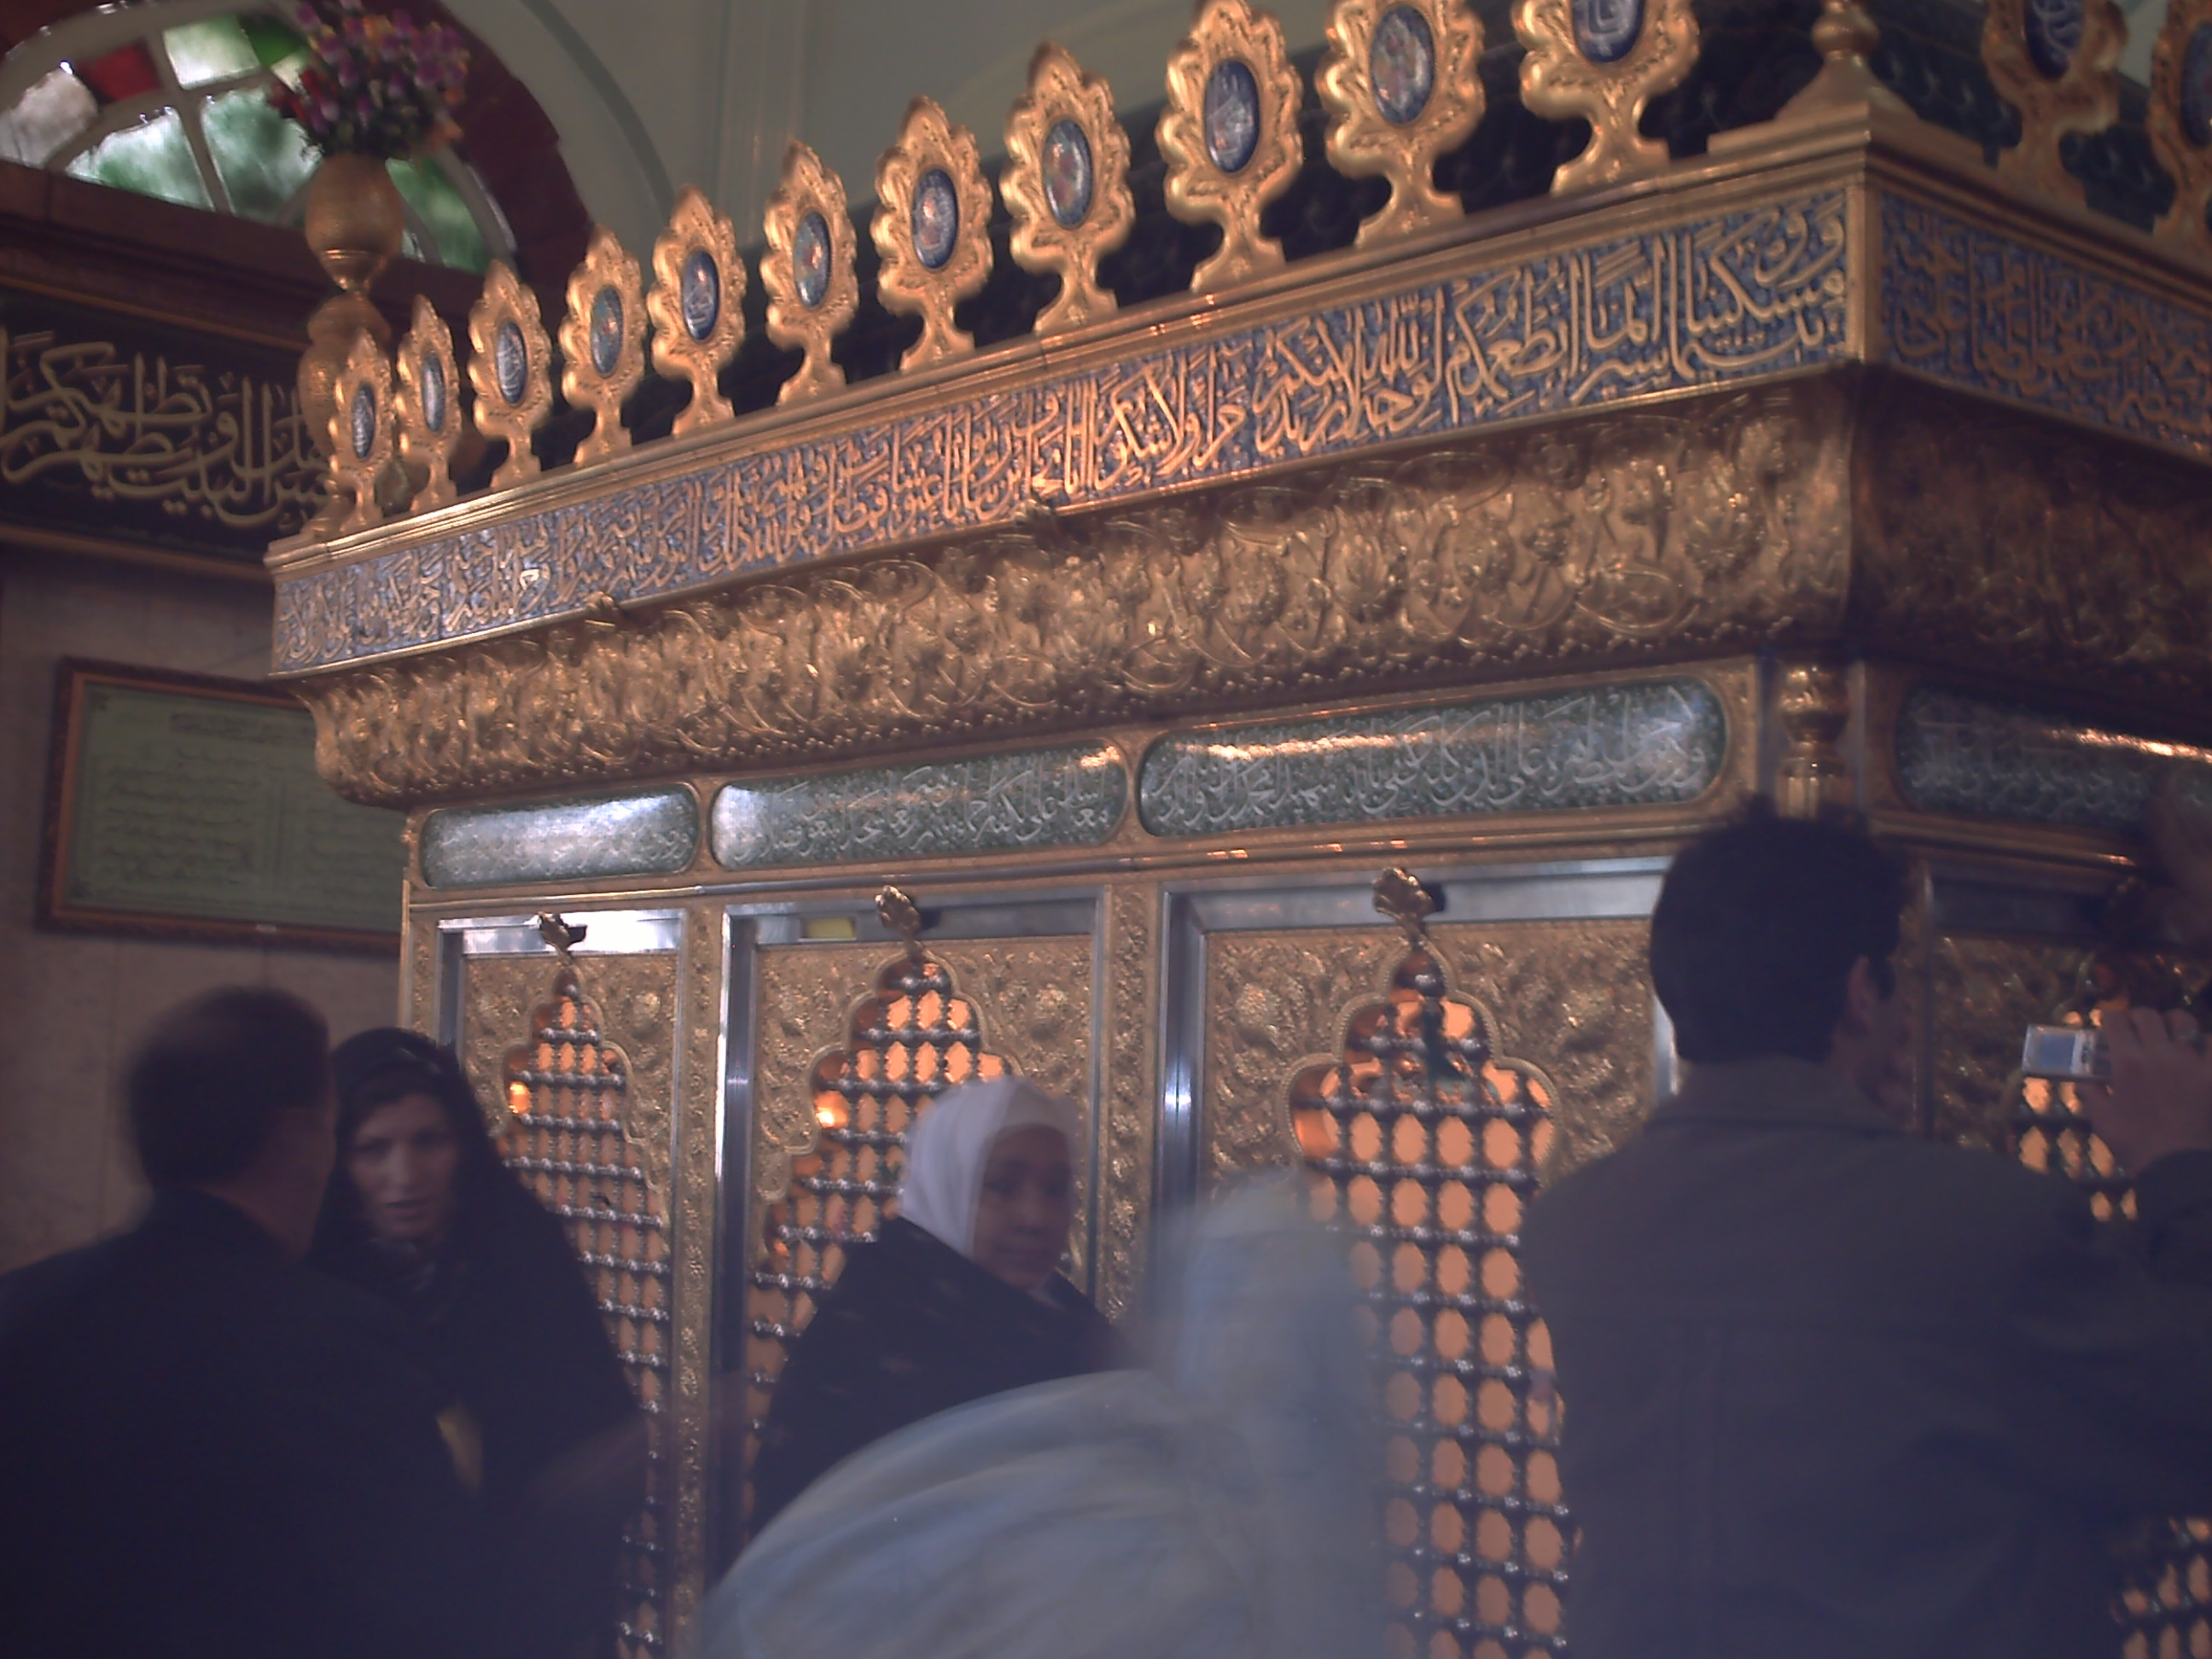 People walk around a fenced gilded indoor enclosure around Sakinah’s tomb